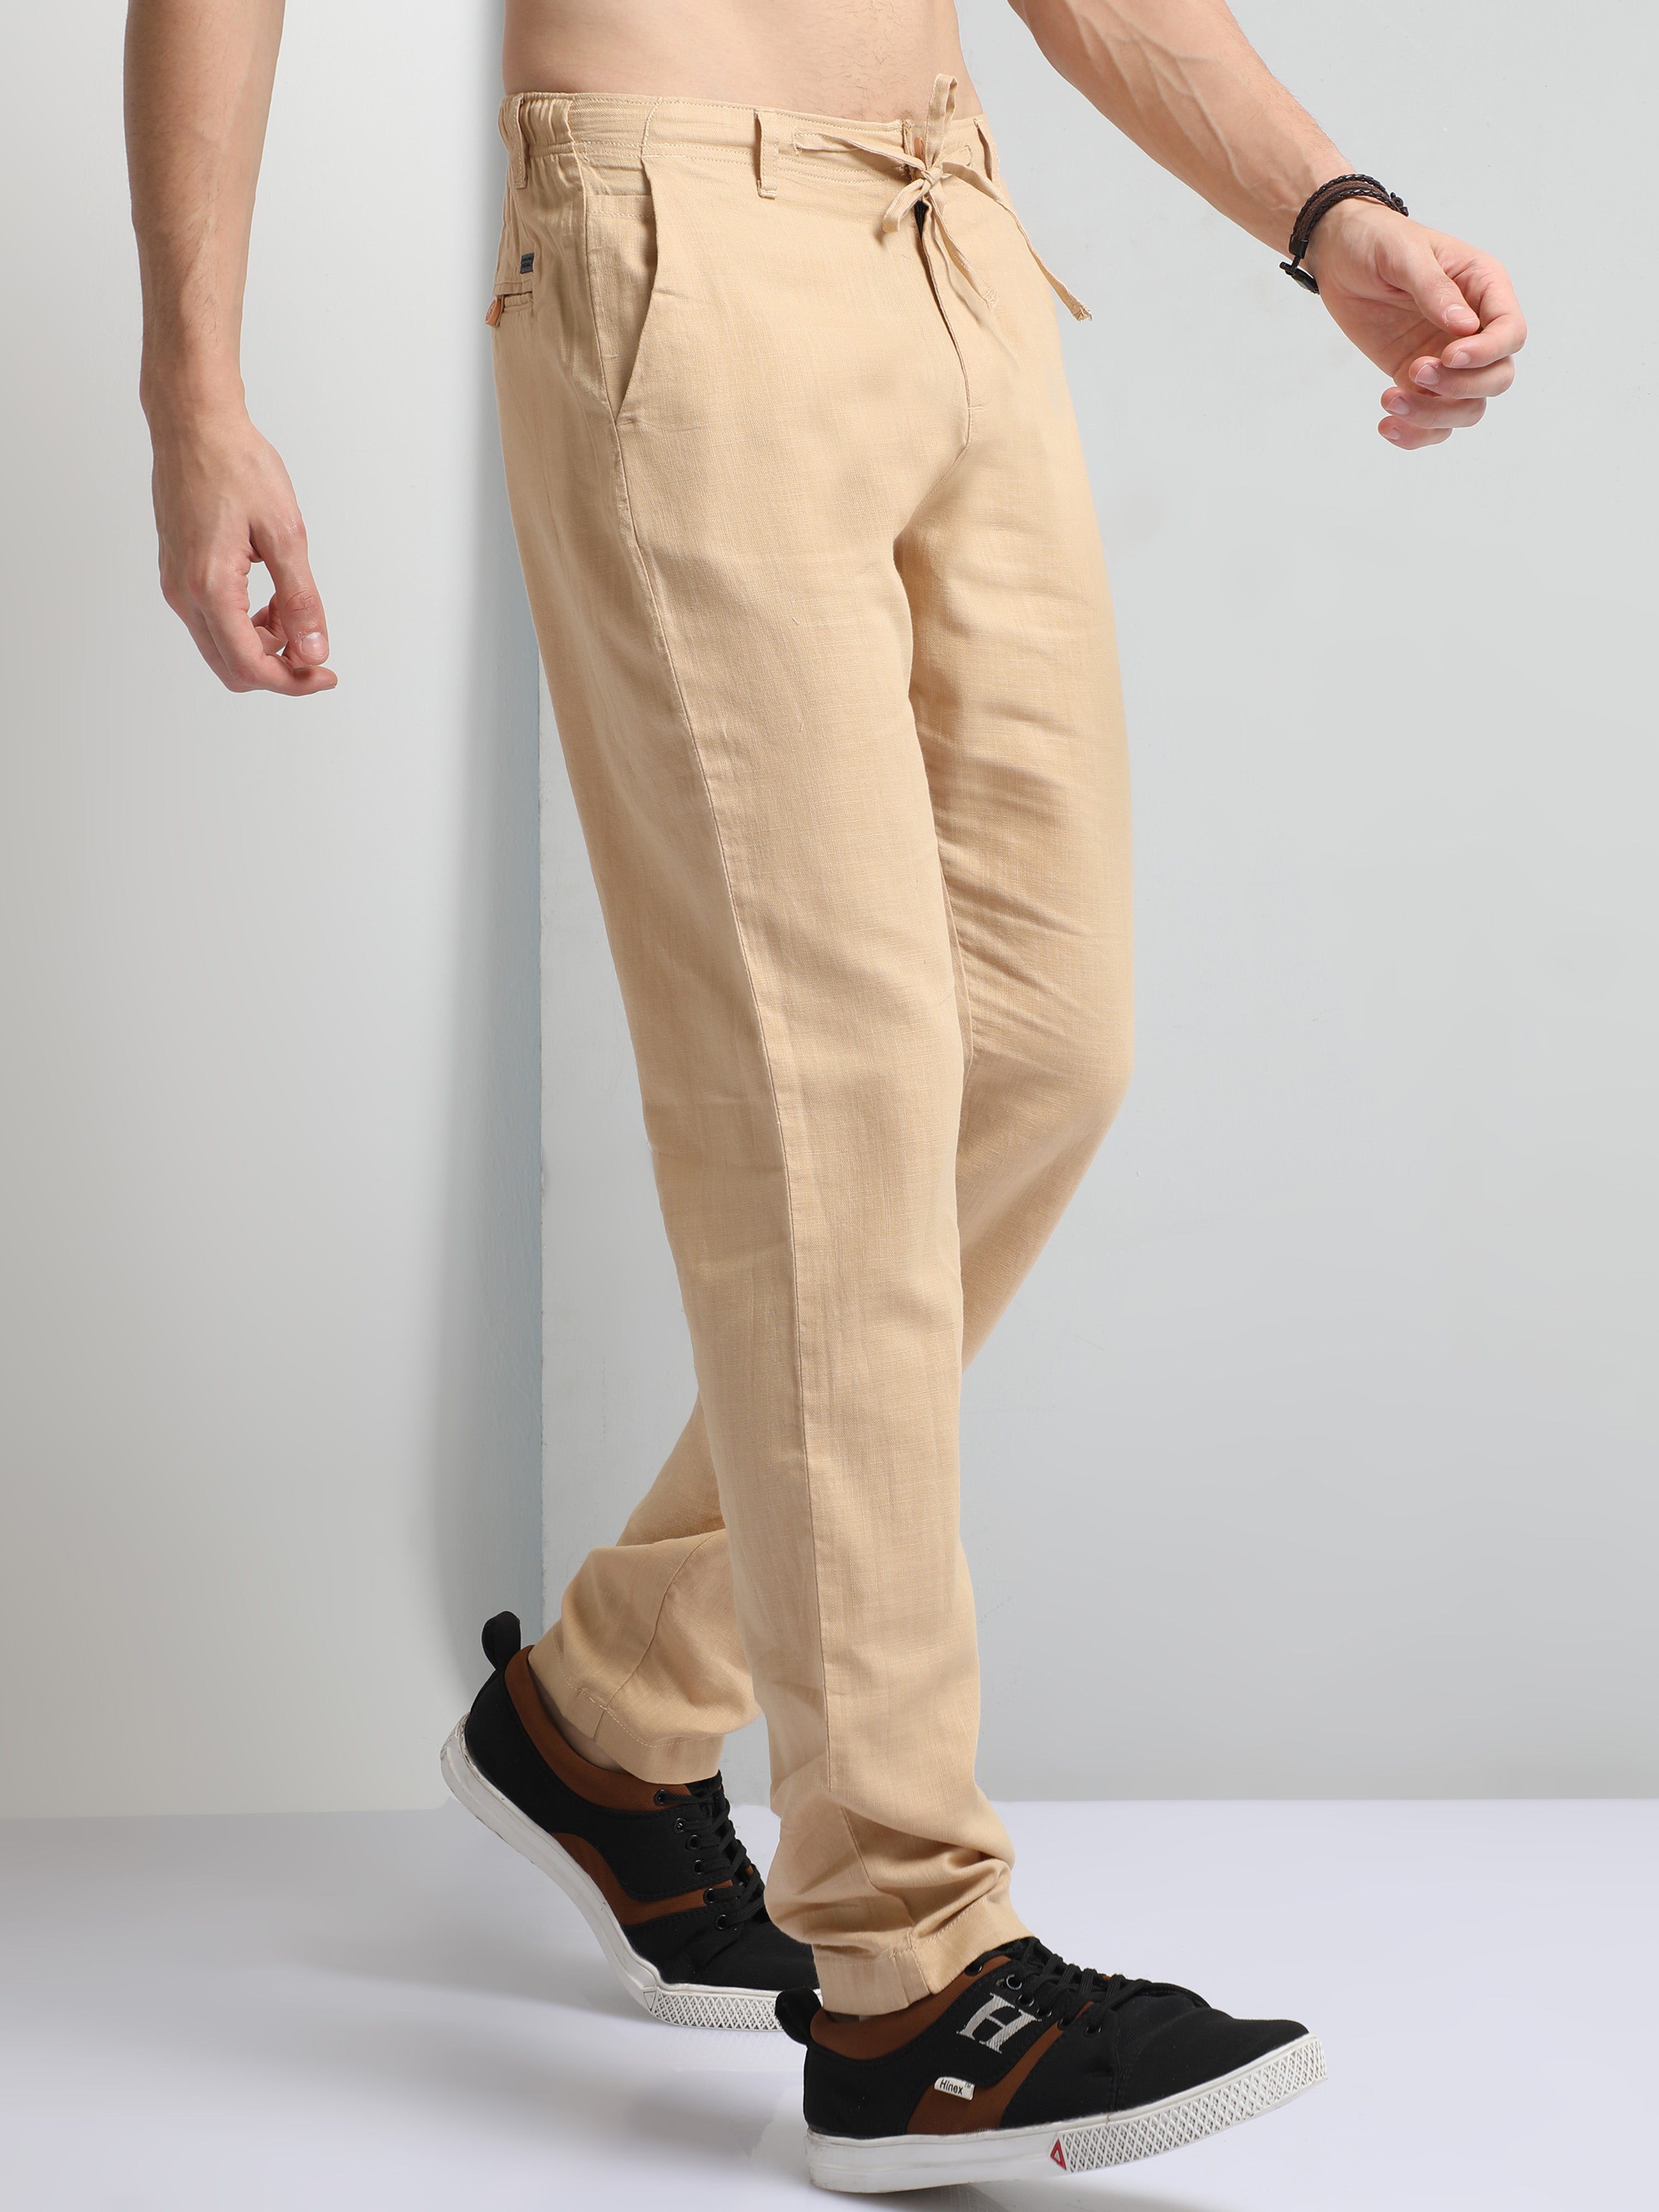 Buy Latest Fur Brown Pleated Pants Mens Online In India